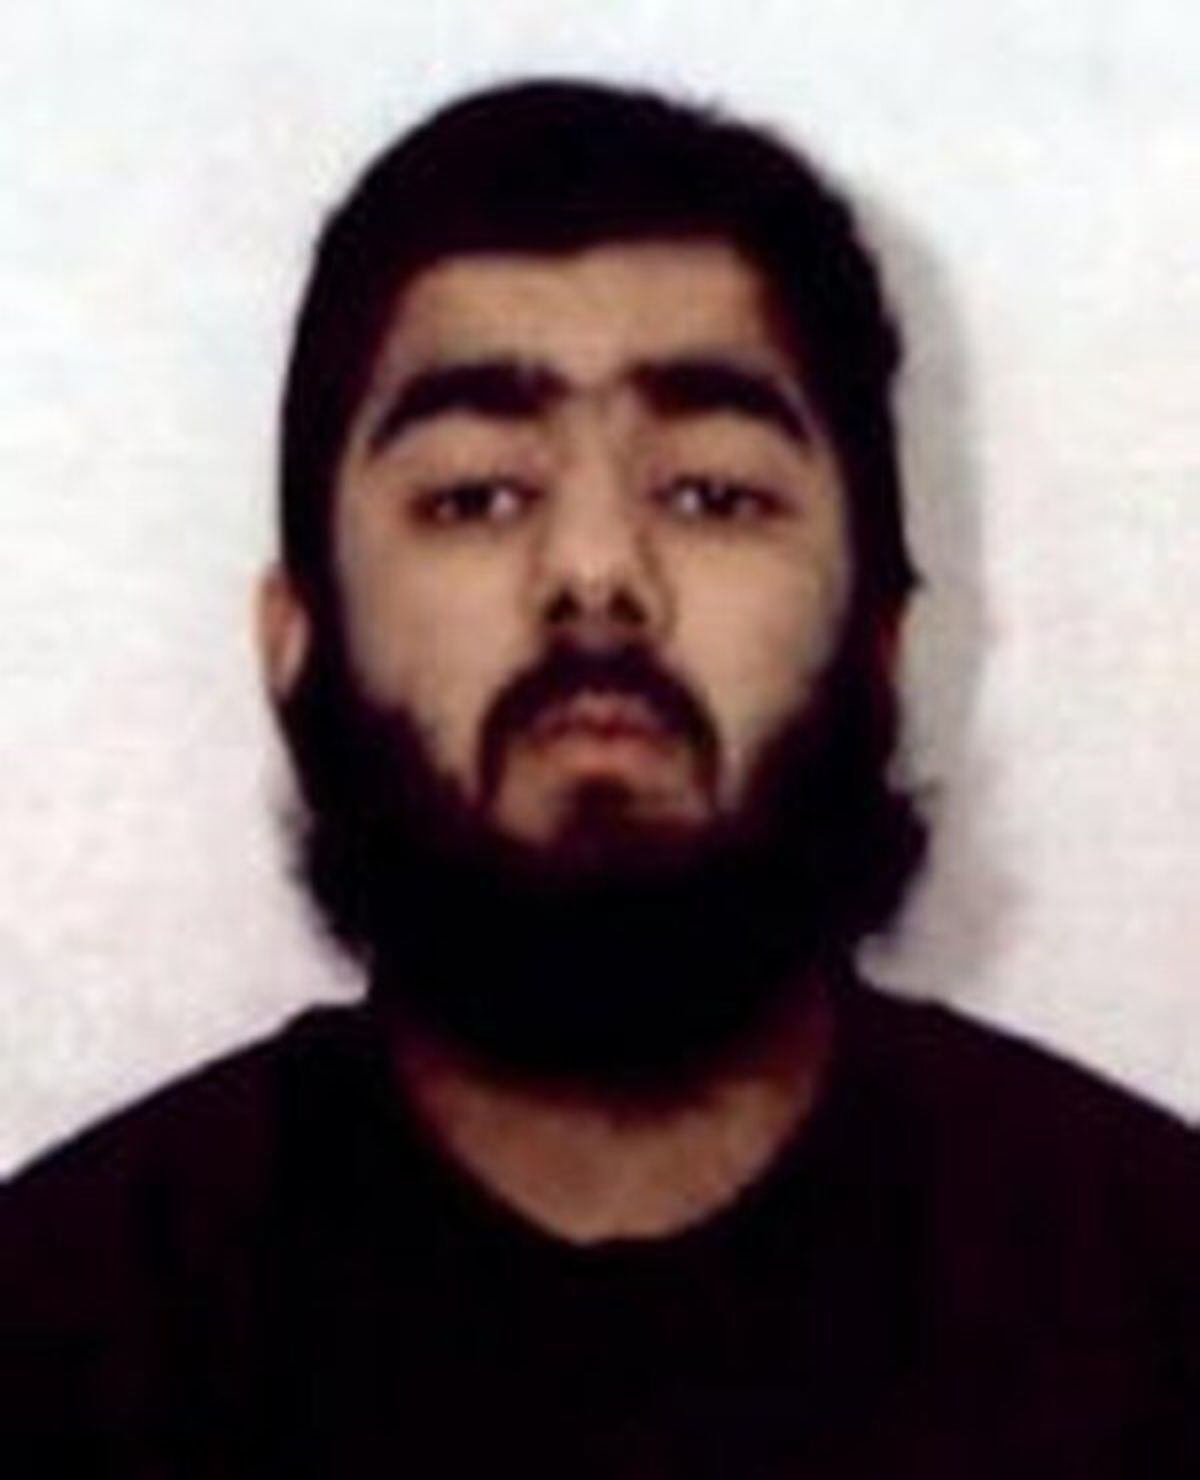 Terrorist Usman Khan